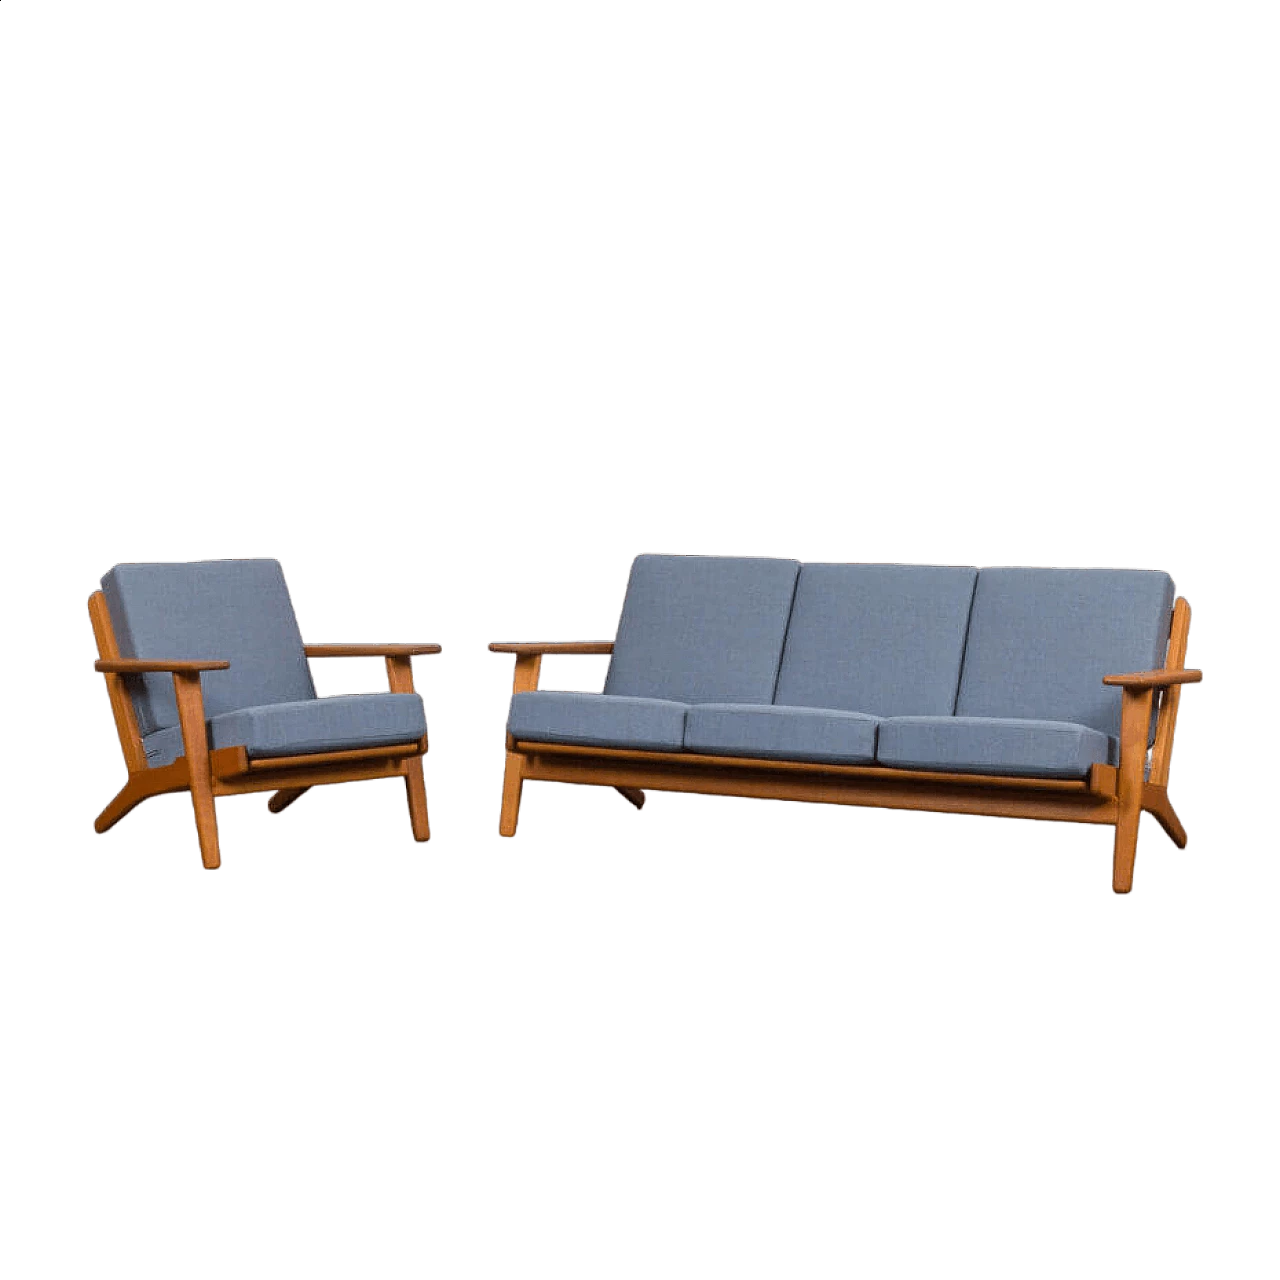 GE-290 oak three-seater sofa and armchair by Hans J. Wegner for Getama, 1950s 24